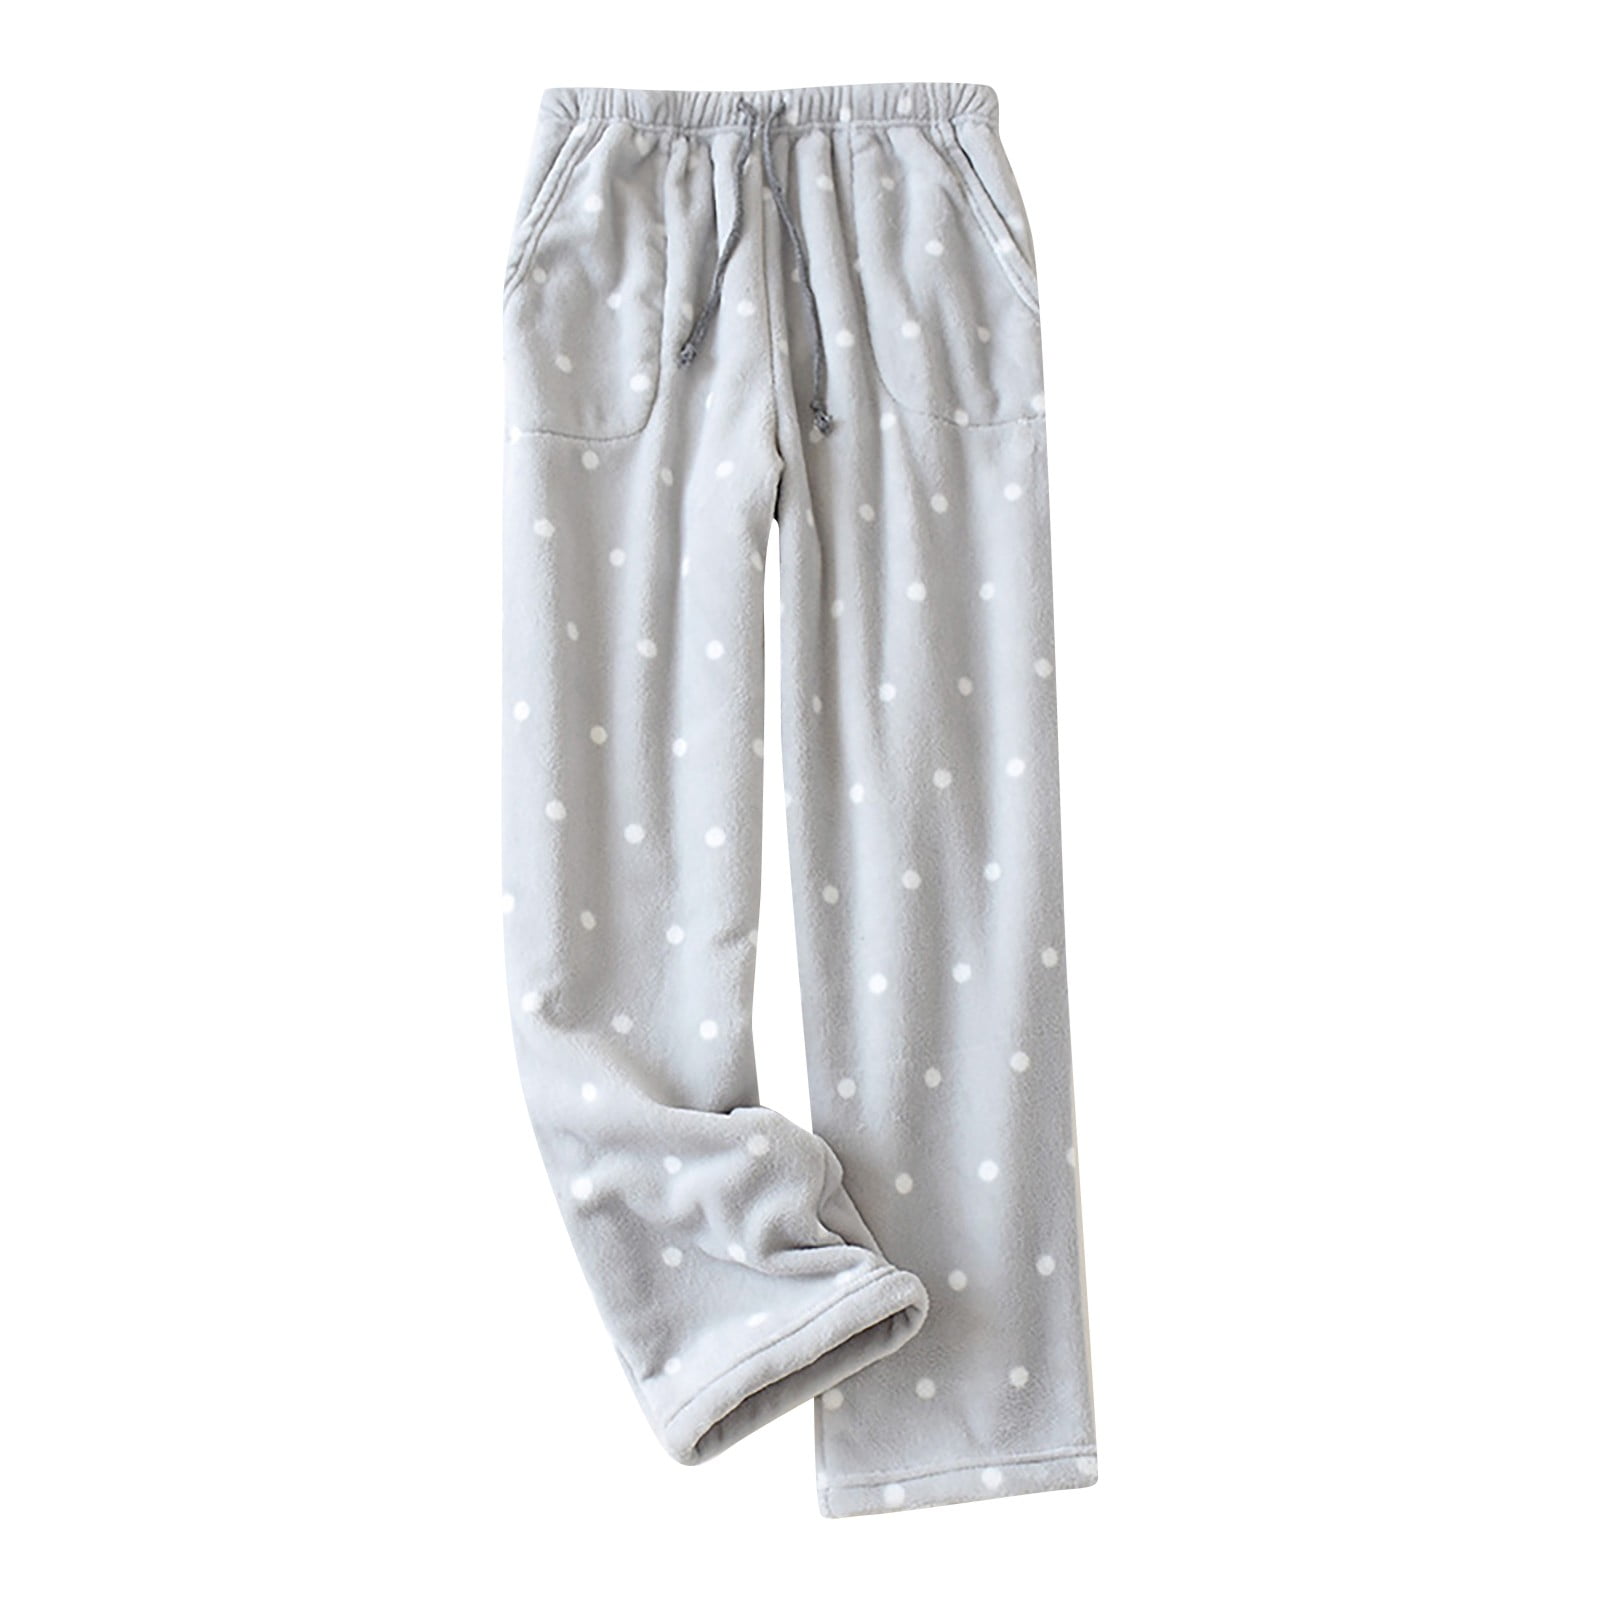 Dtydtpe Clearance Sales, Wide Leg Pants for Women Pajama Pants